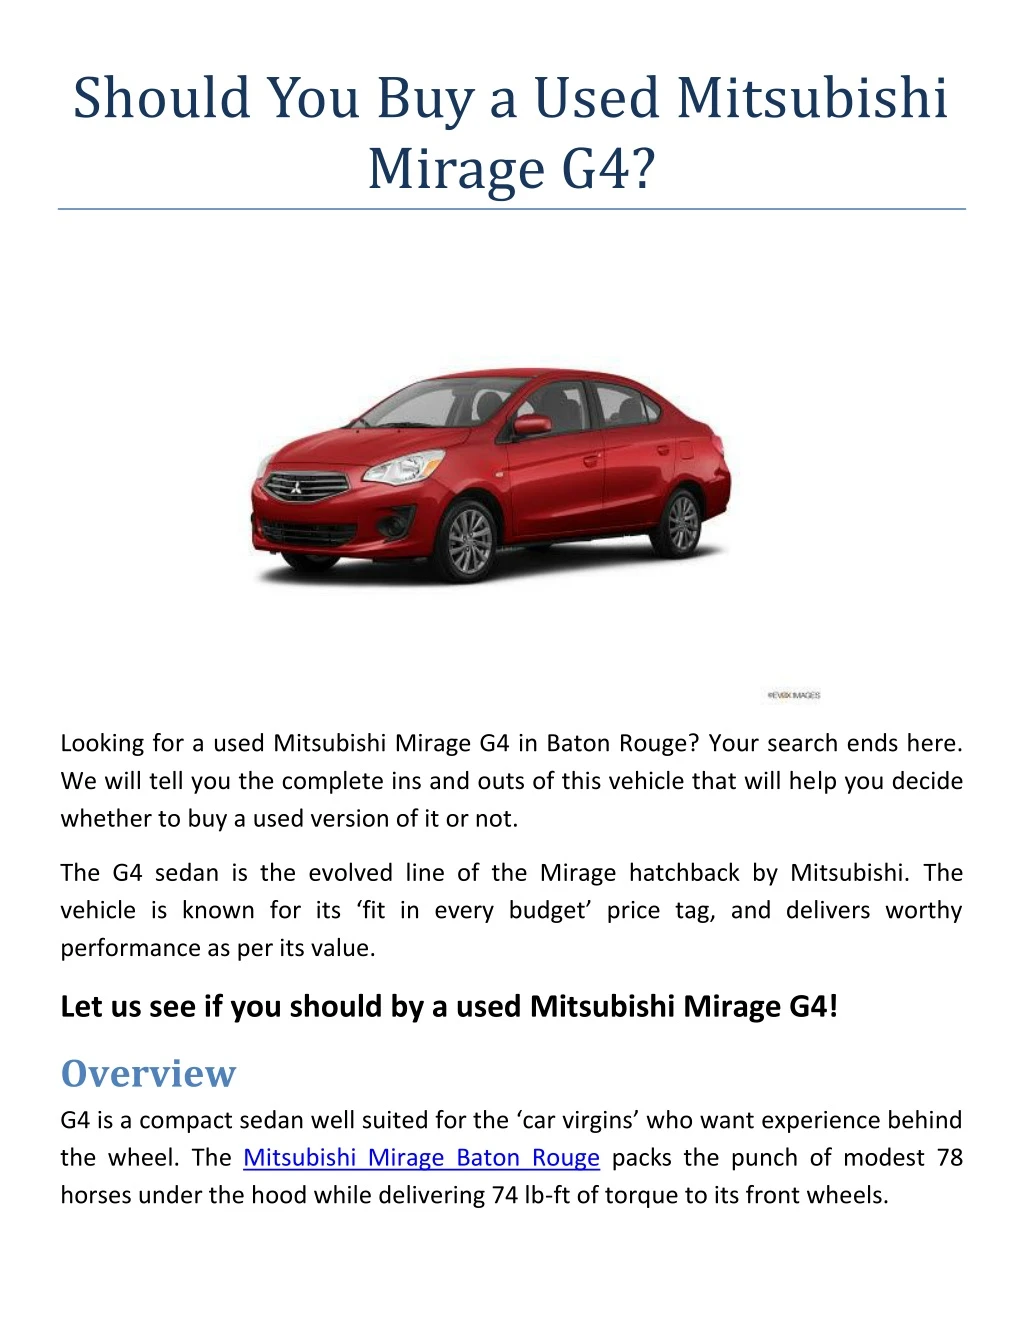 should you buy a used mitsubishi mirage g4